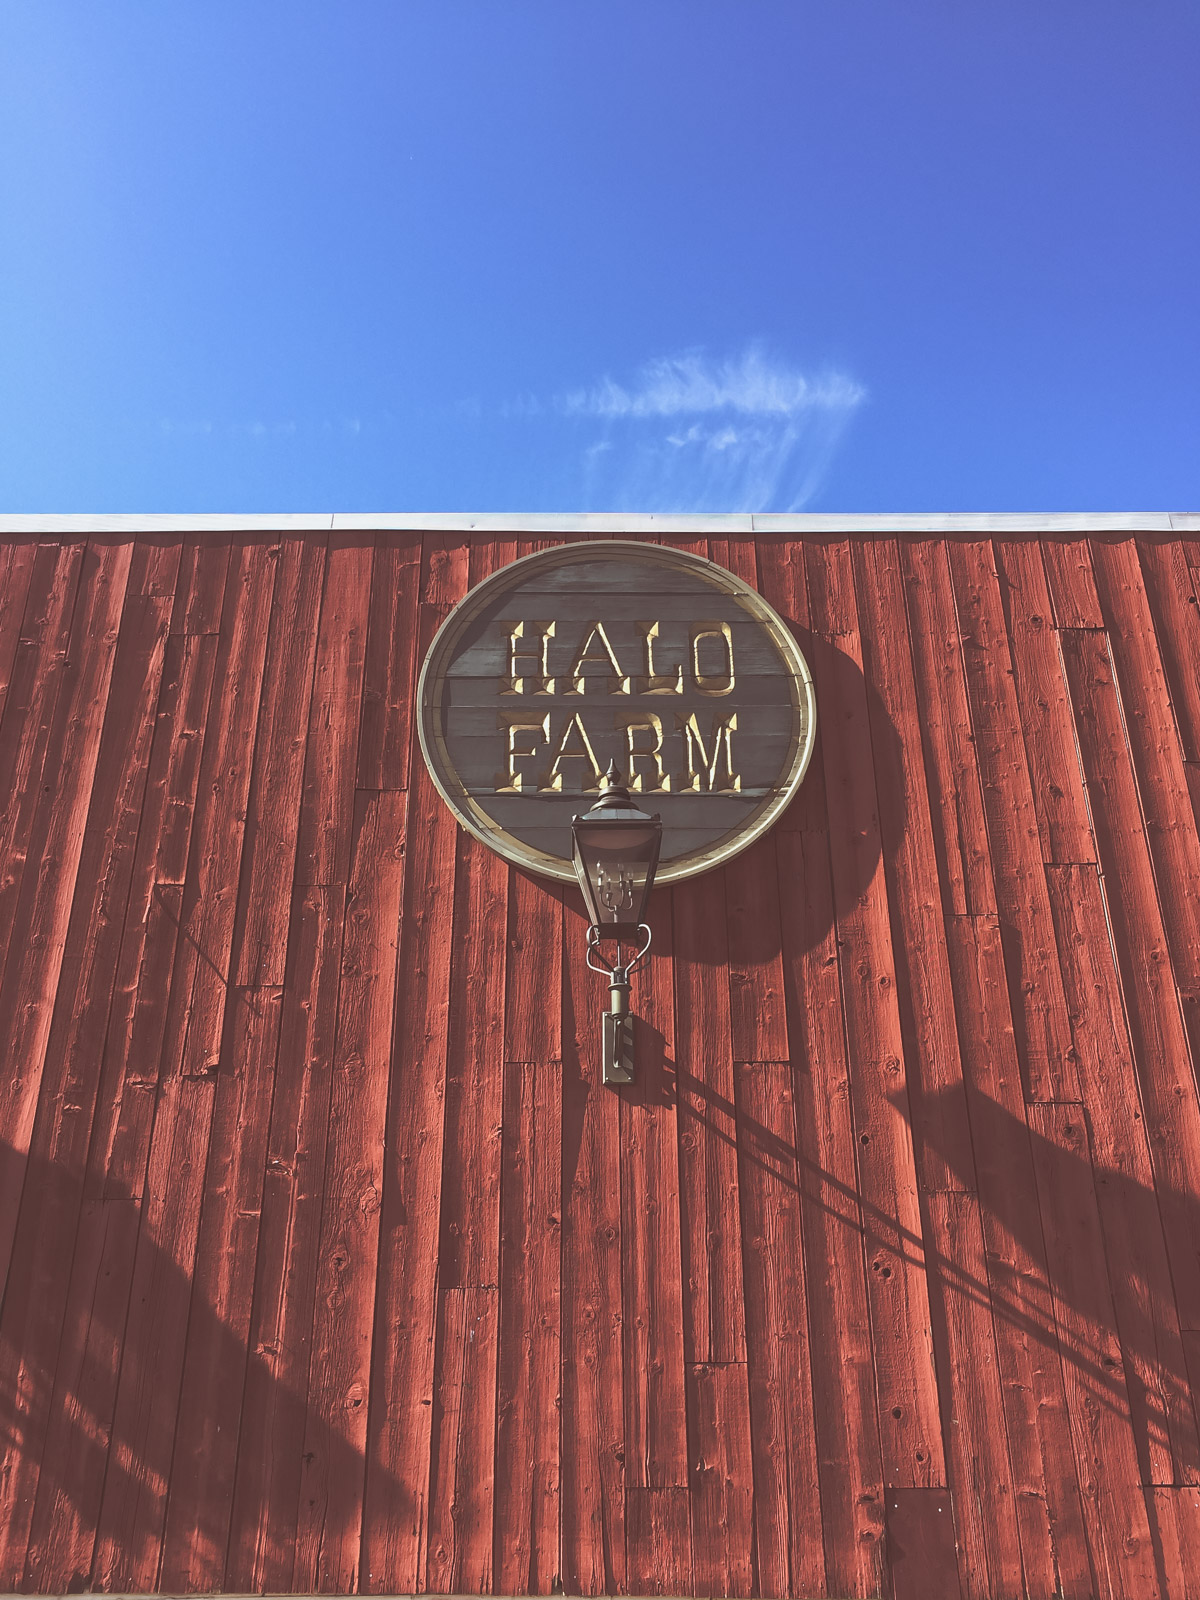 Halo Farm